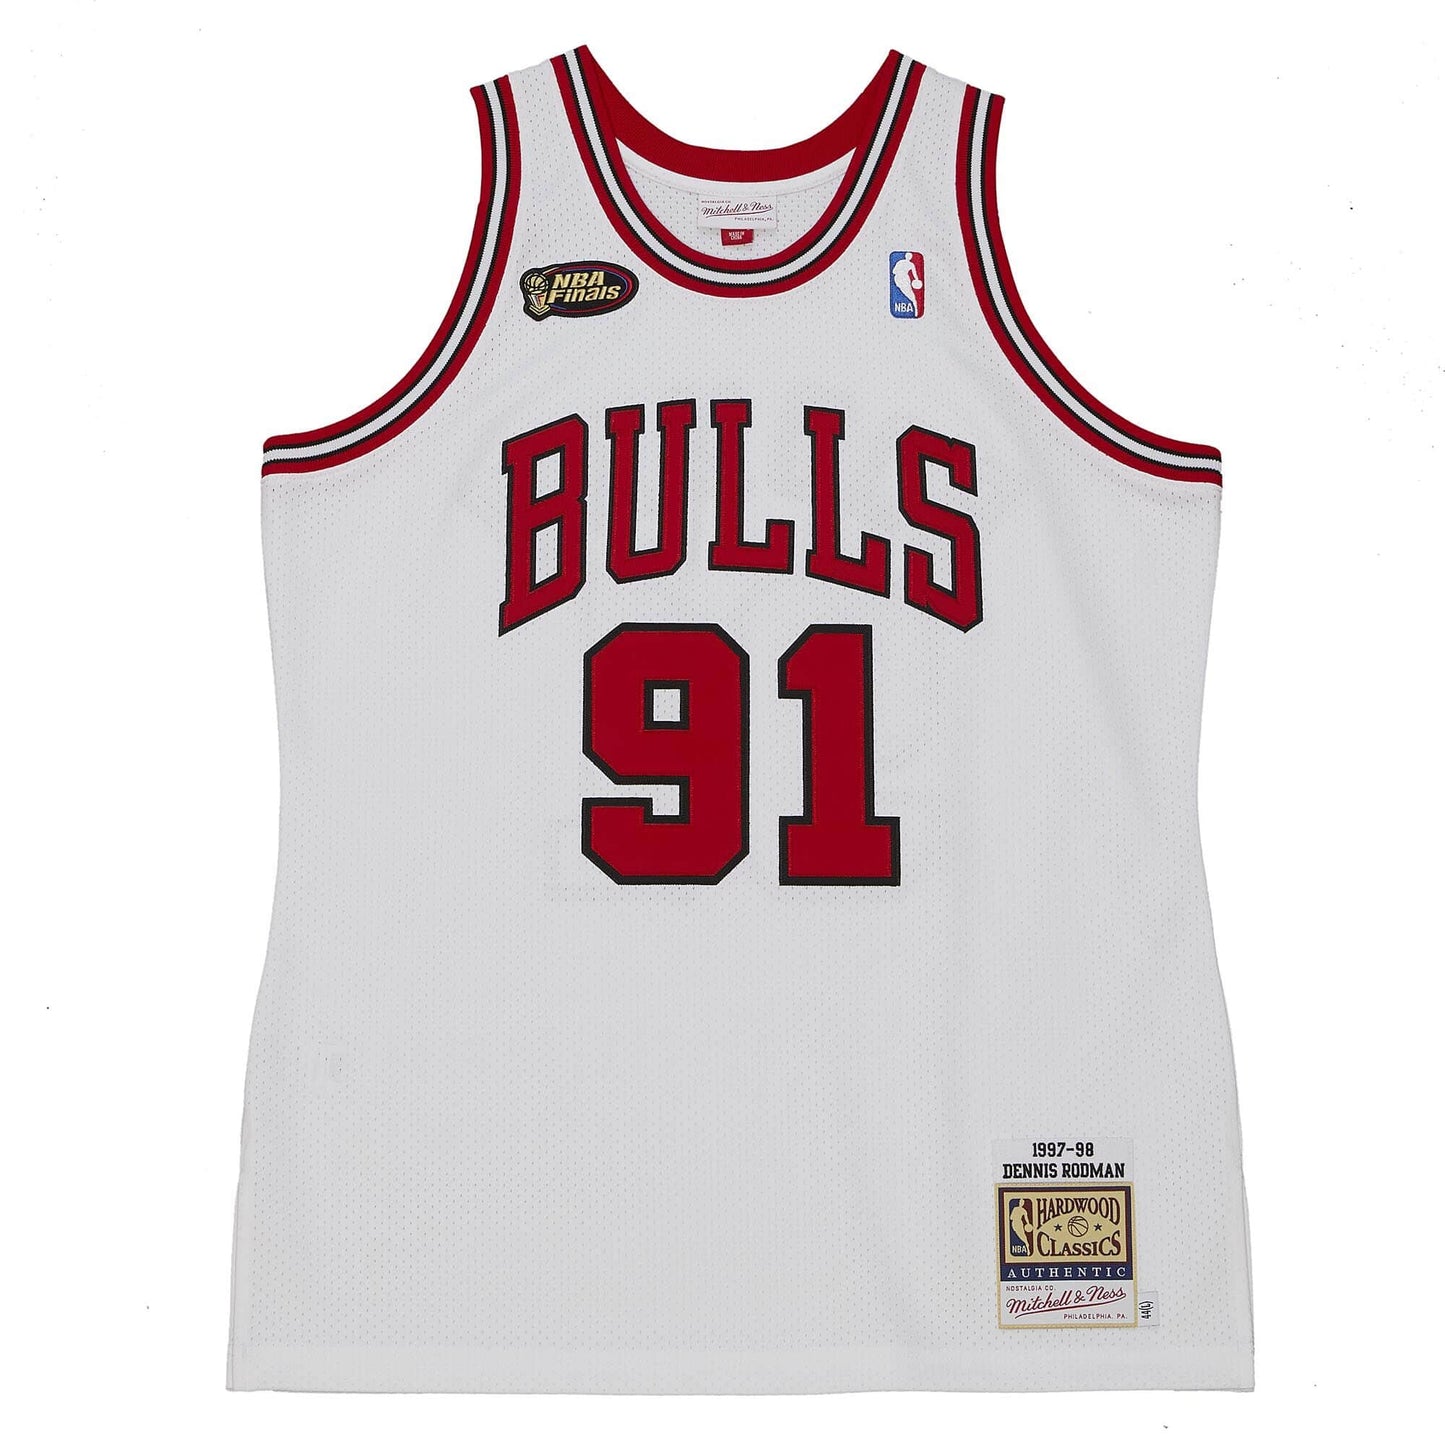 Authentic Dennis Rodman Chicago Bulls Finals 1997-98 Jersey